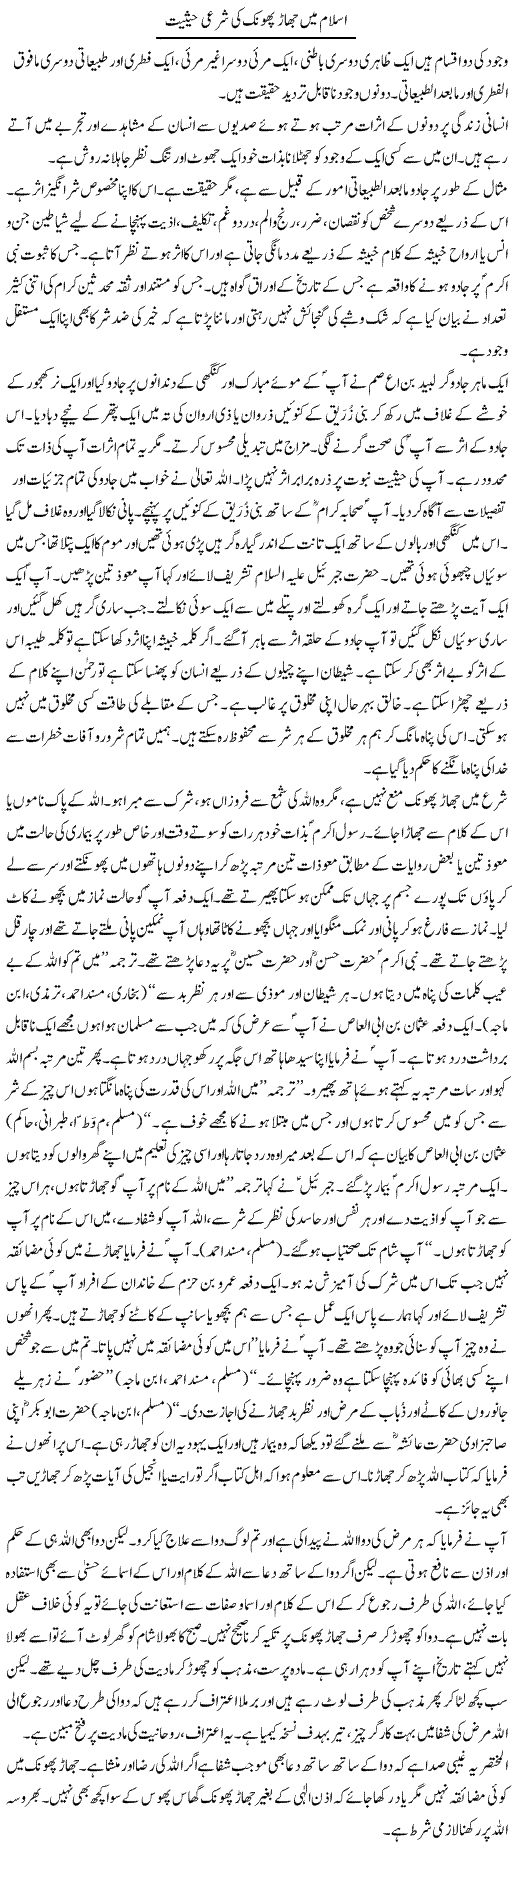 Islam Mein Jhaar Phoonk Ki Sharai Hesiyat | Dr. Muhammad Tayyab Khan Singhanvi | Daily Urdu Columns